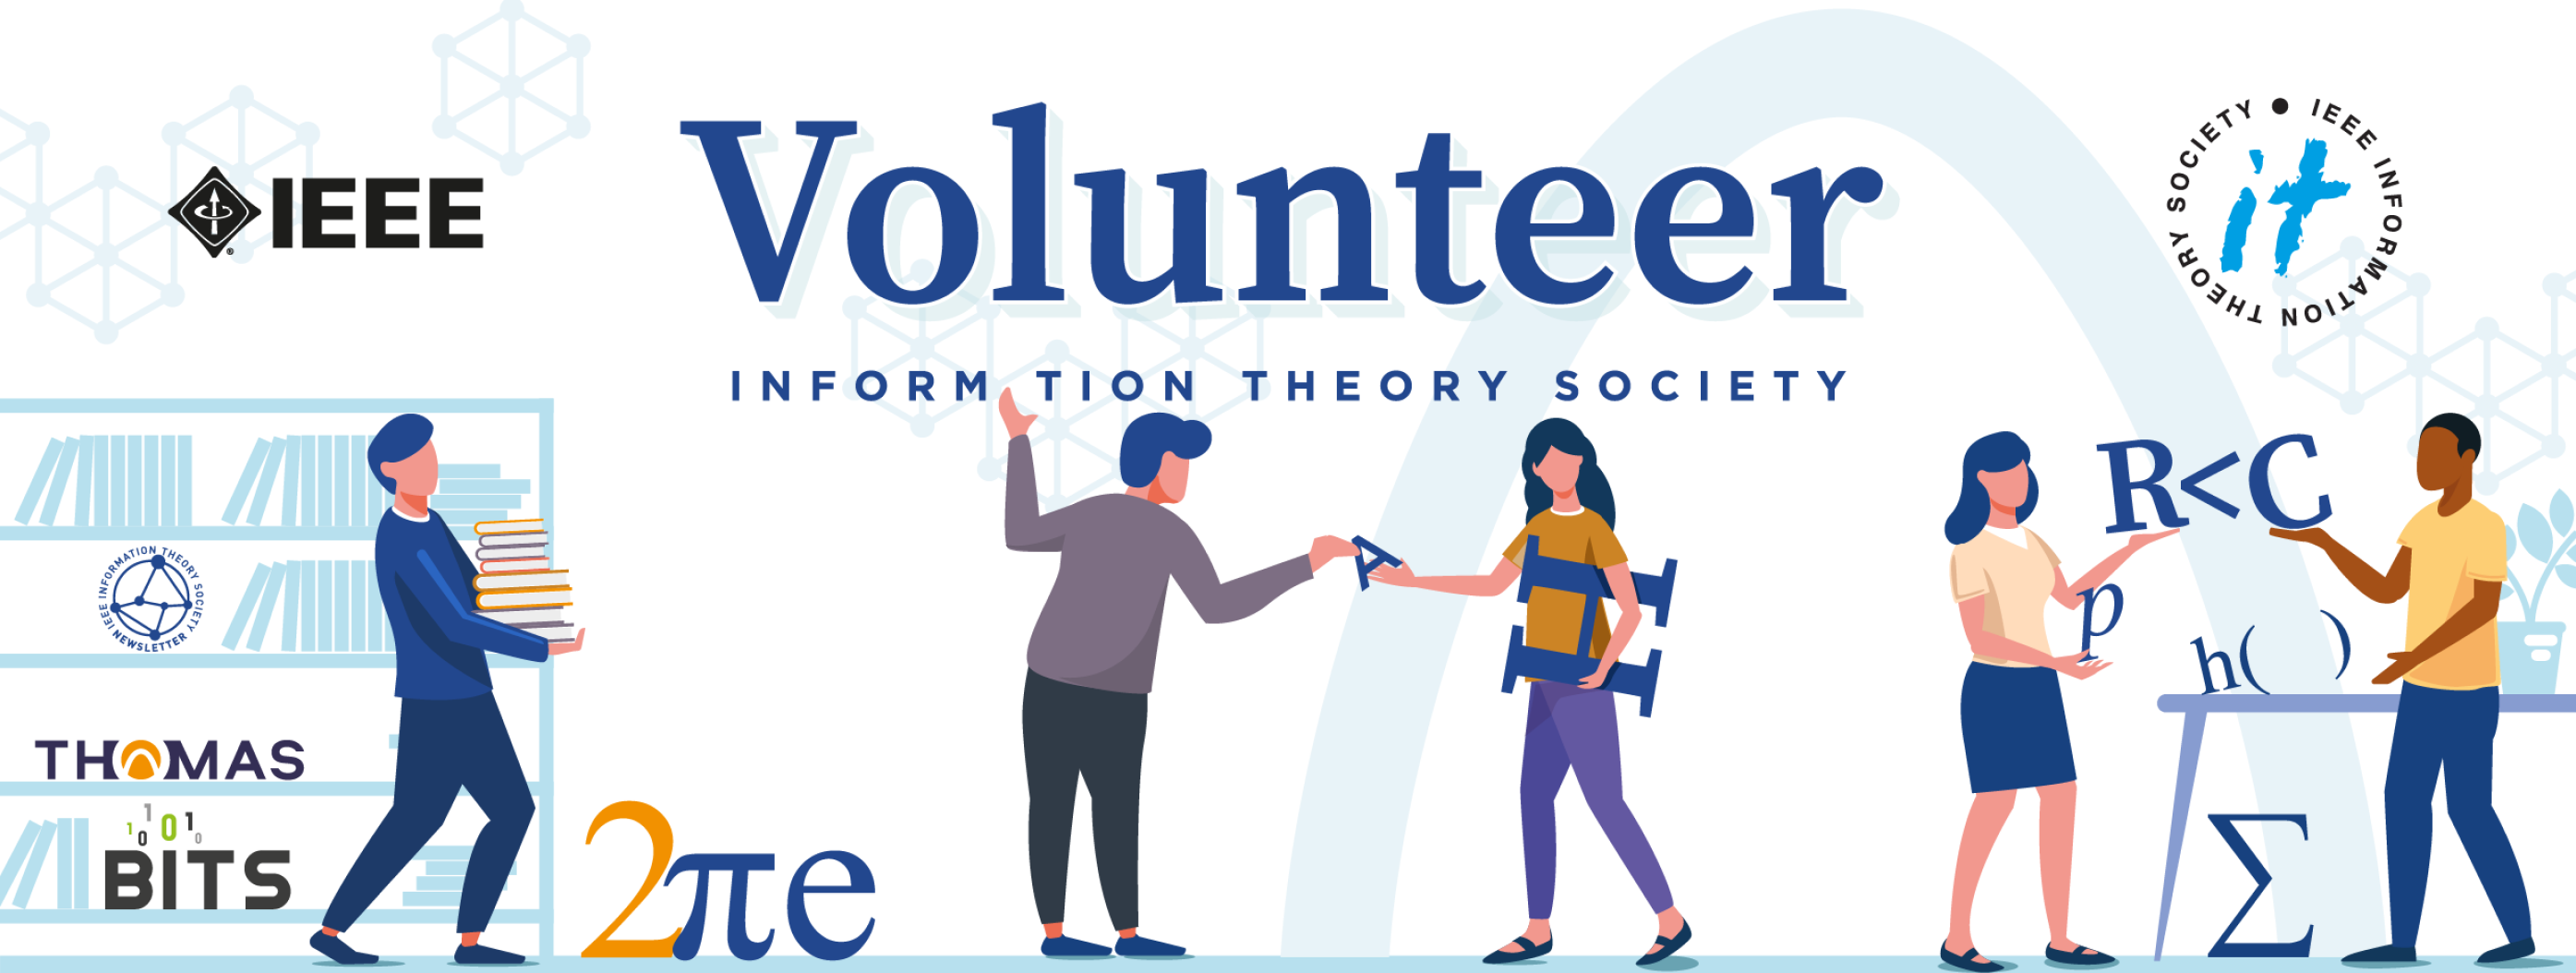 Banner artwork for volunteering, showing members working together